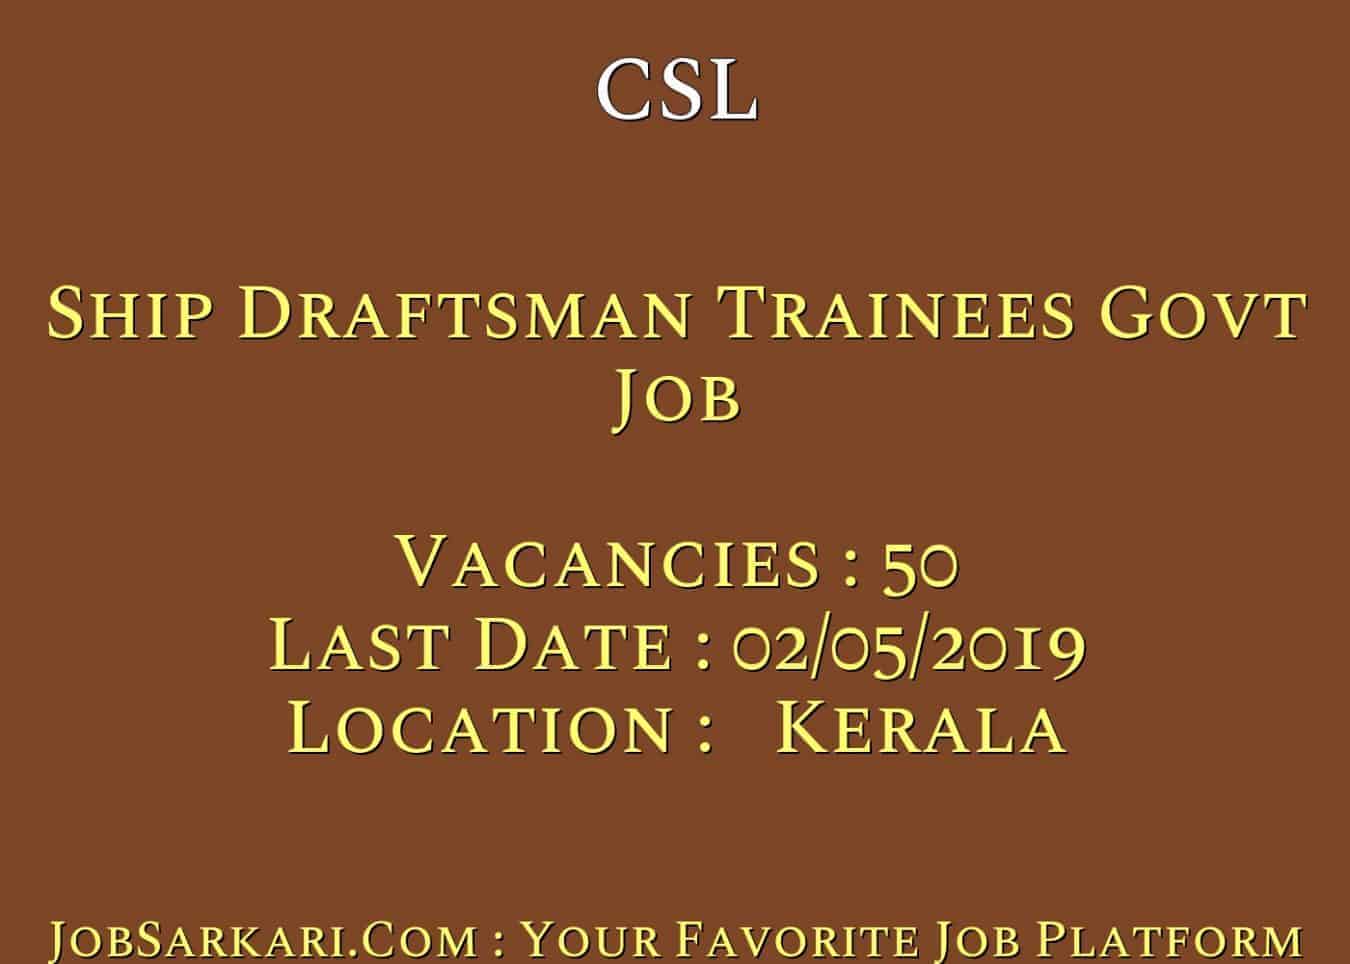 CSL Recruitment 2019 For Ship Draftsman Trainees Govt Job